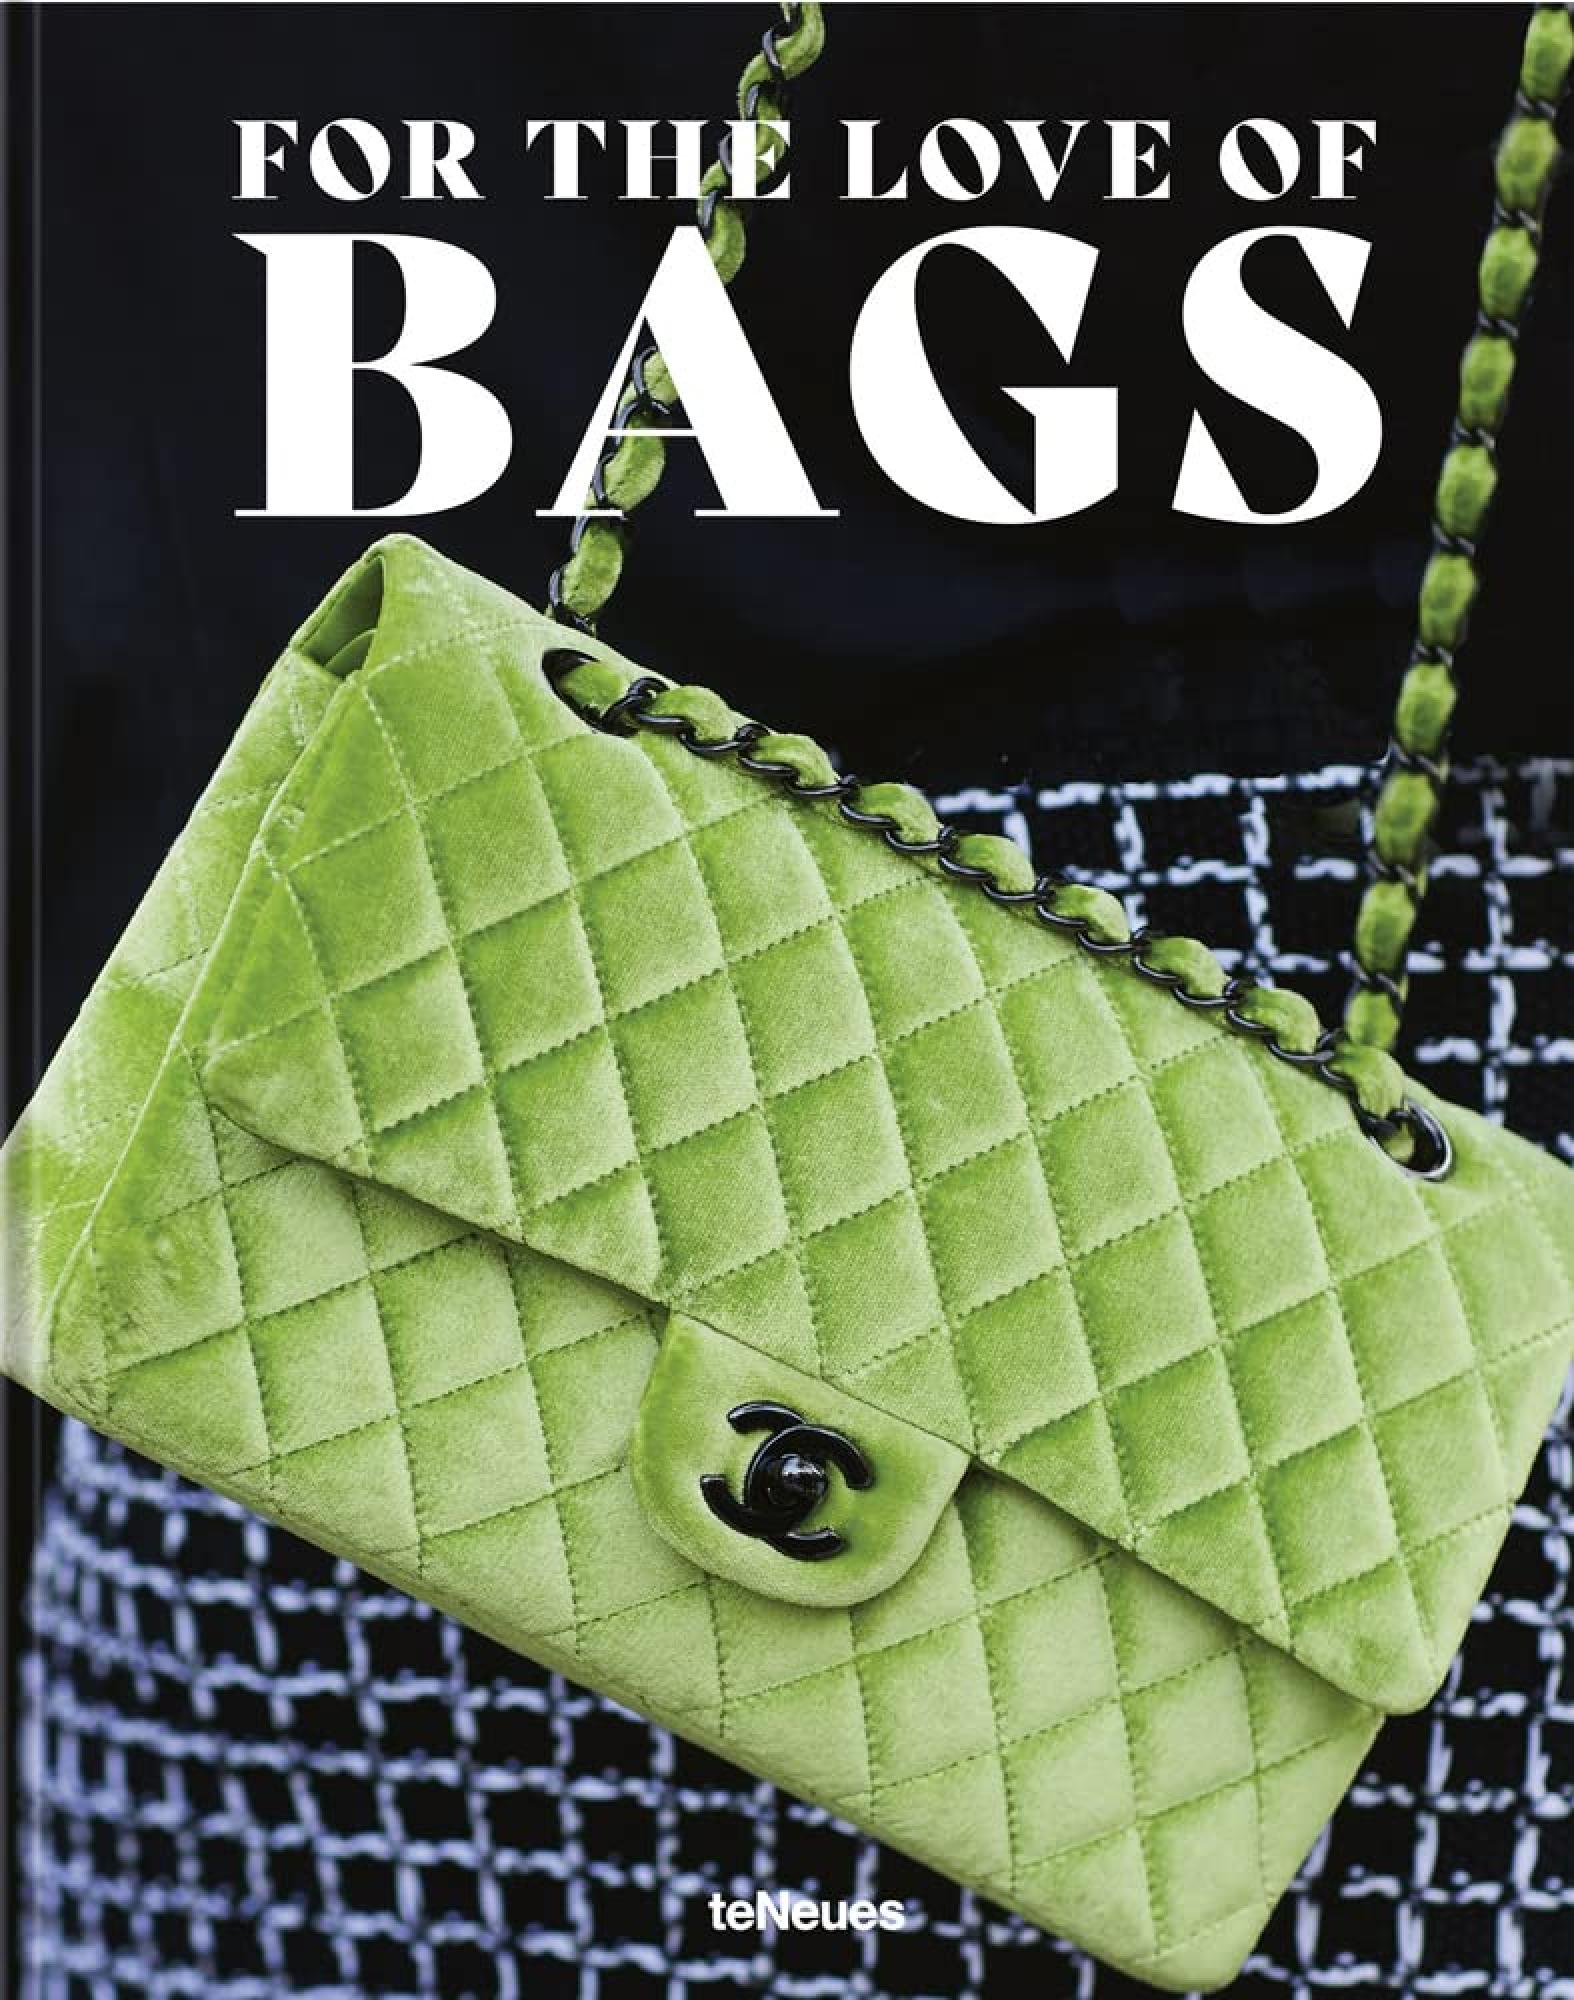 Hermès Birkin. Lady Dior. Chanel 2.55. Fendi Baguette. Handbags